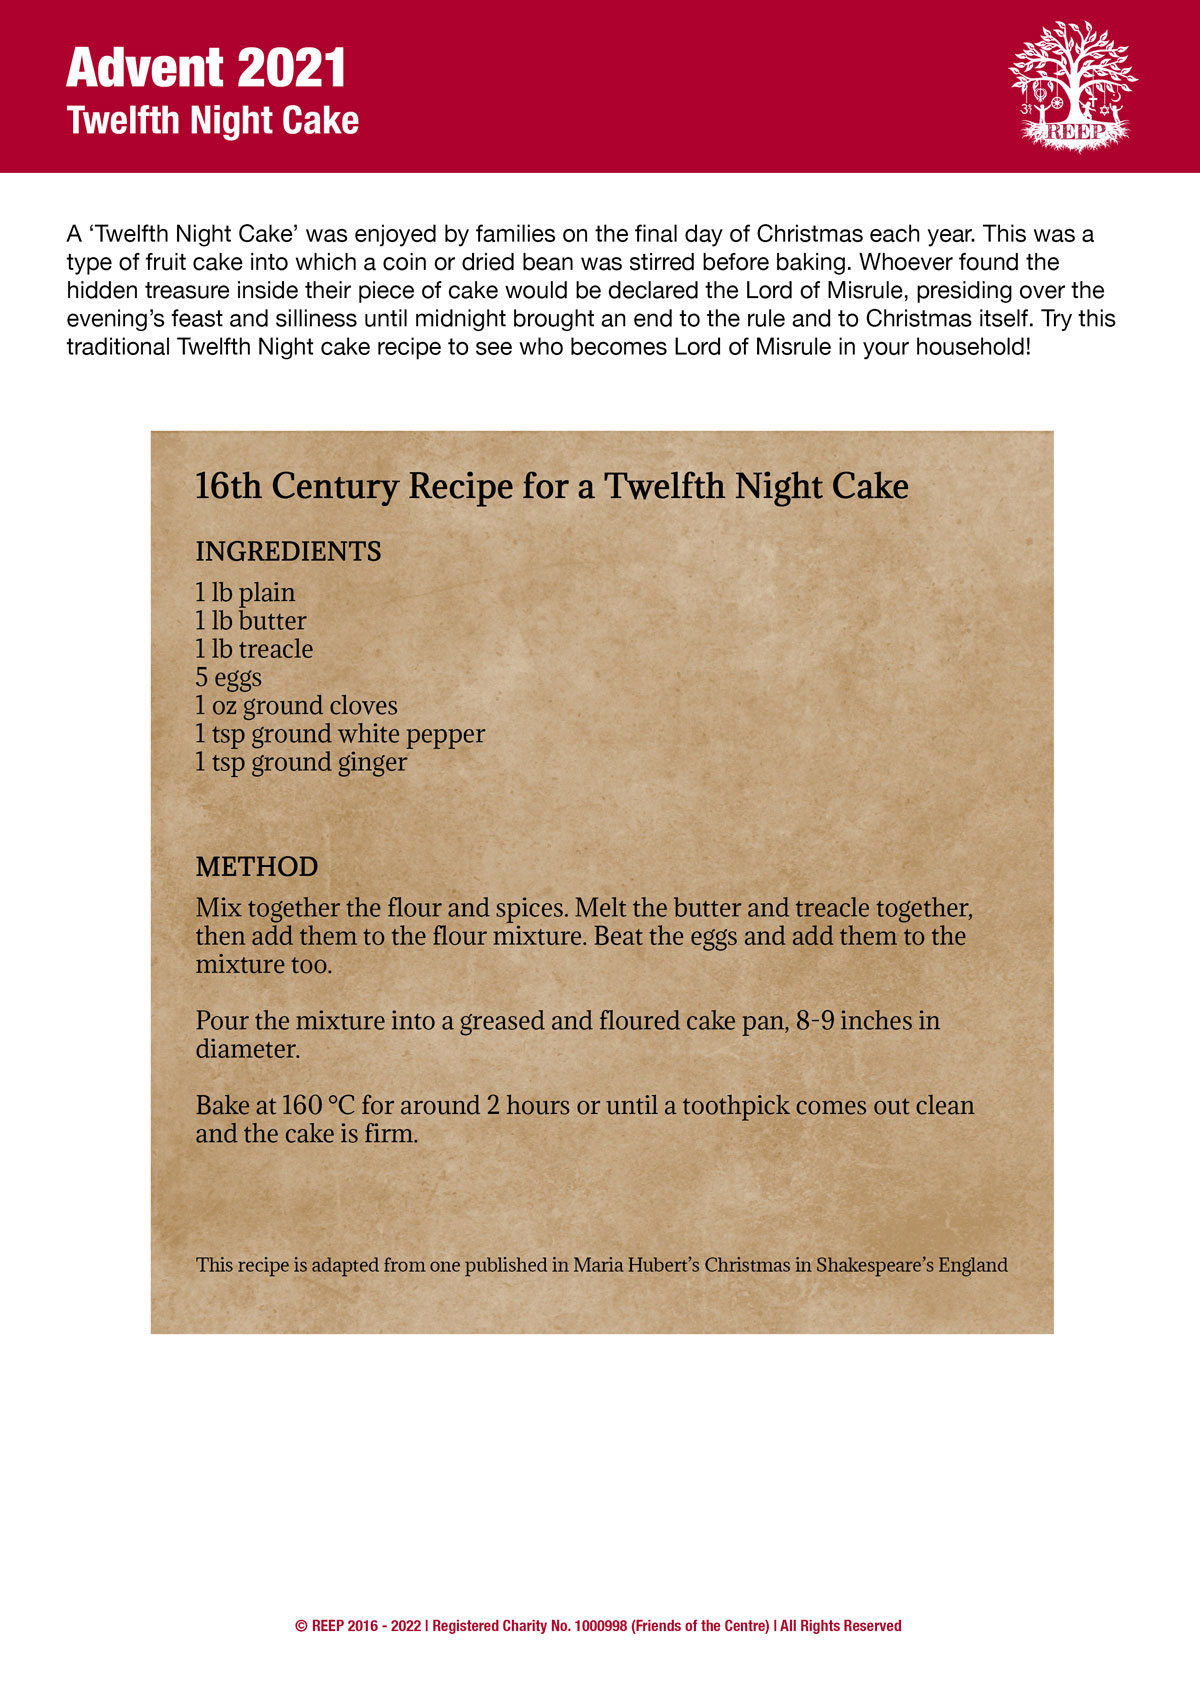 Advent 19 - Twelfth Night Cake